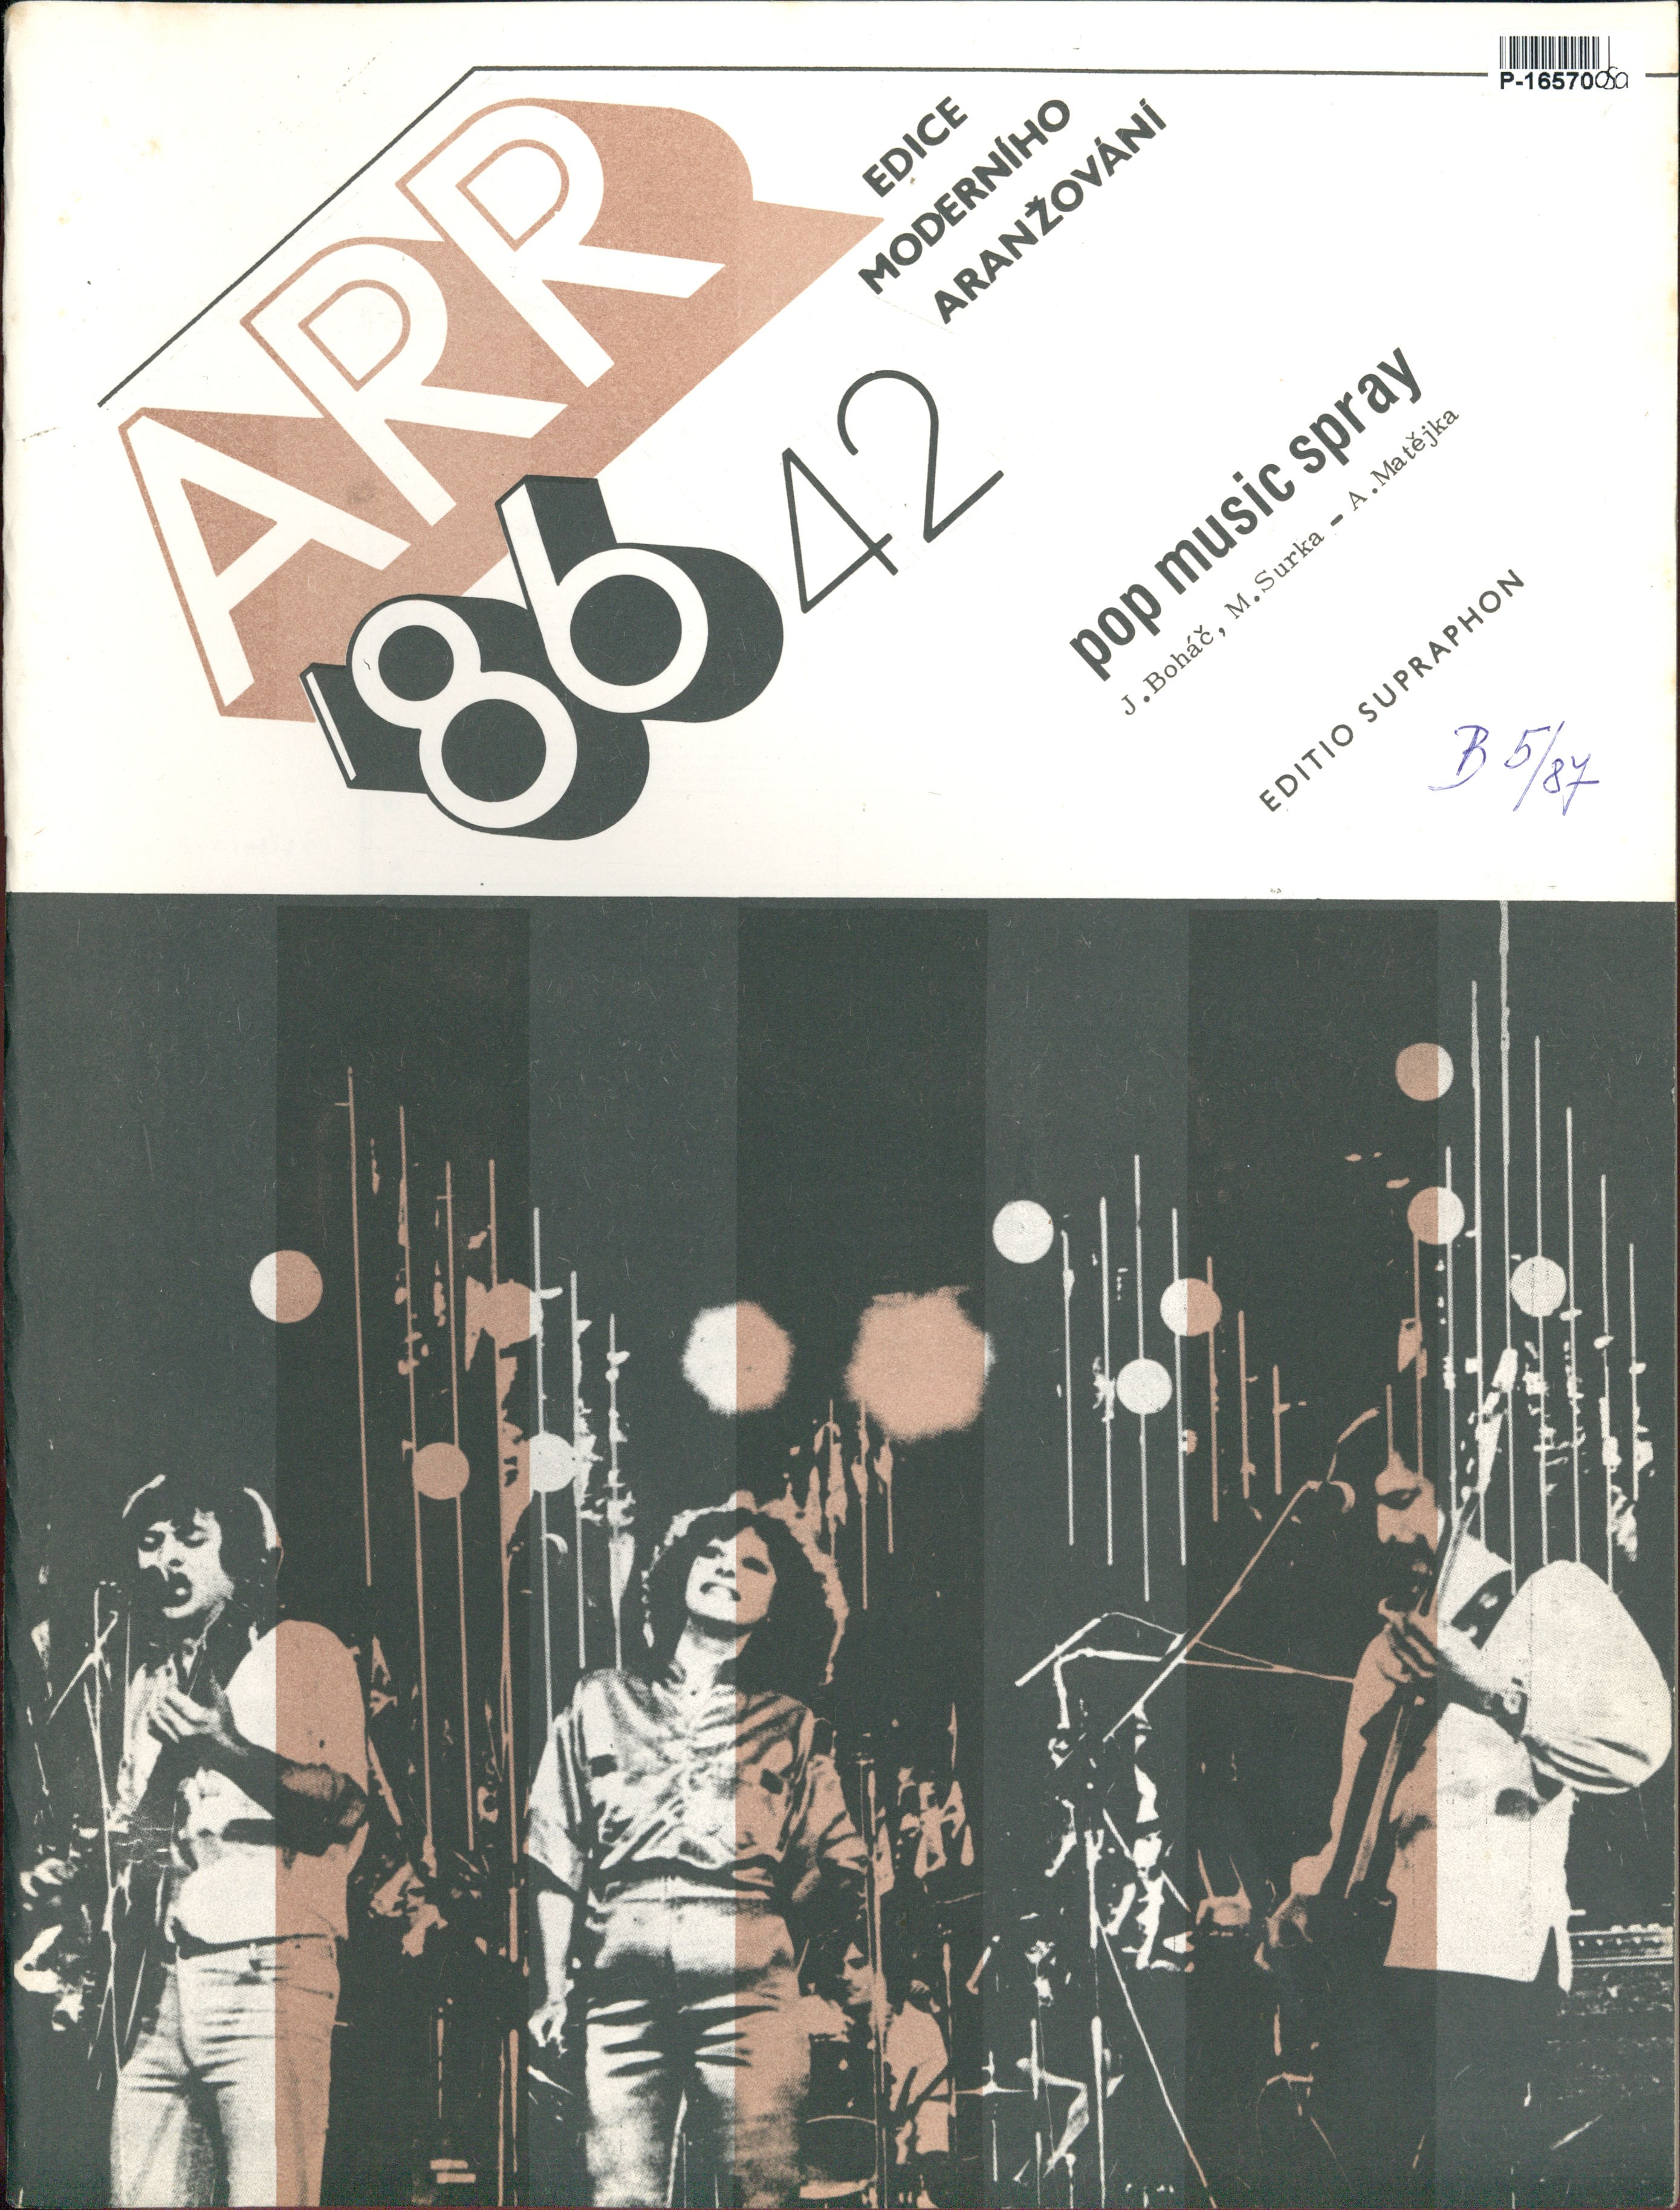 ARR 86 - Pop music spray